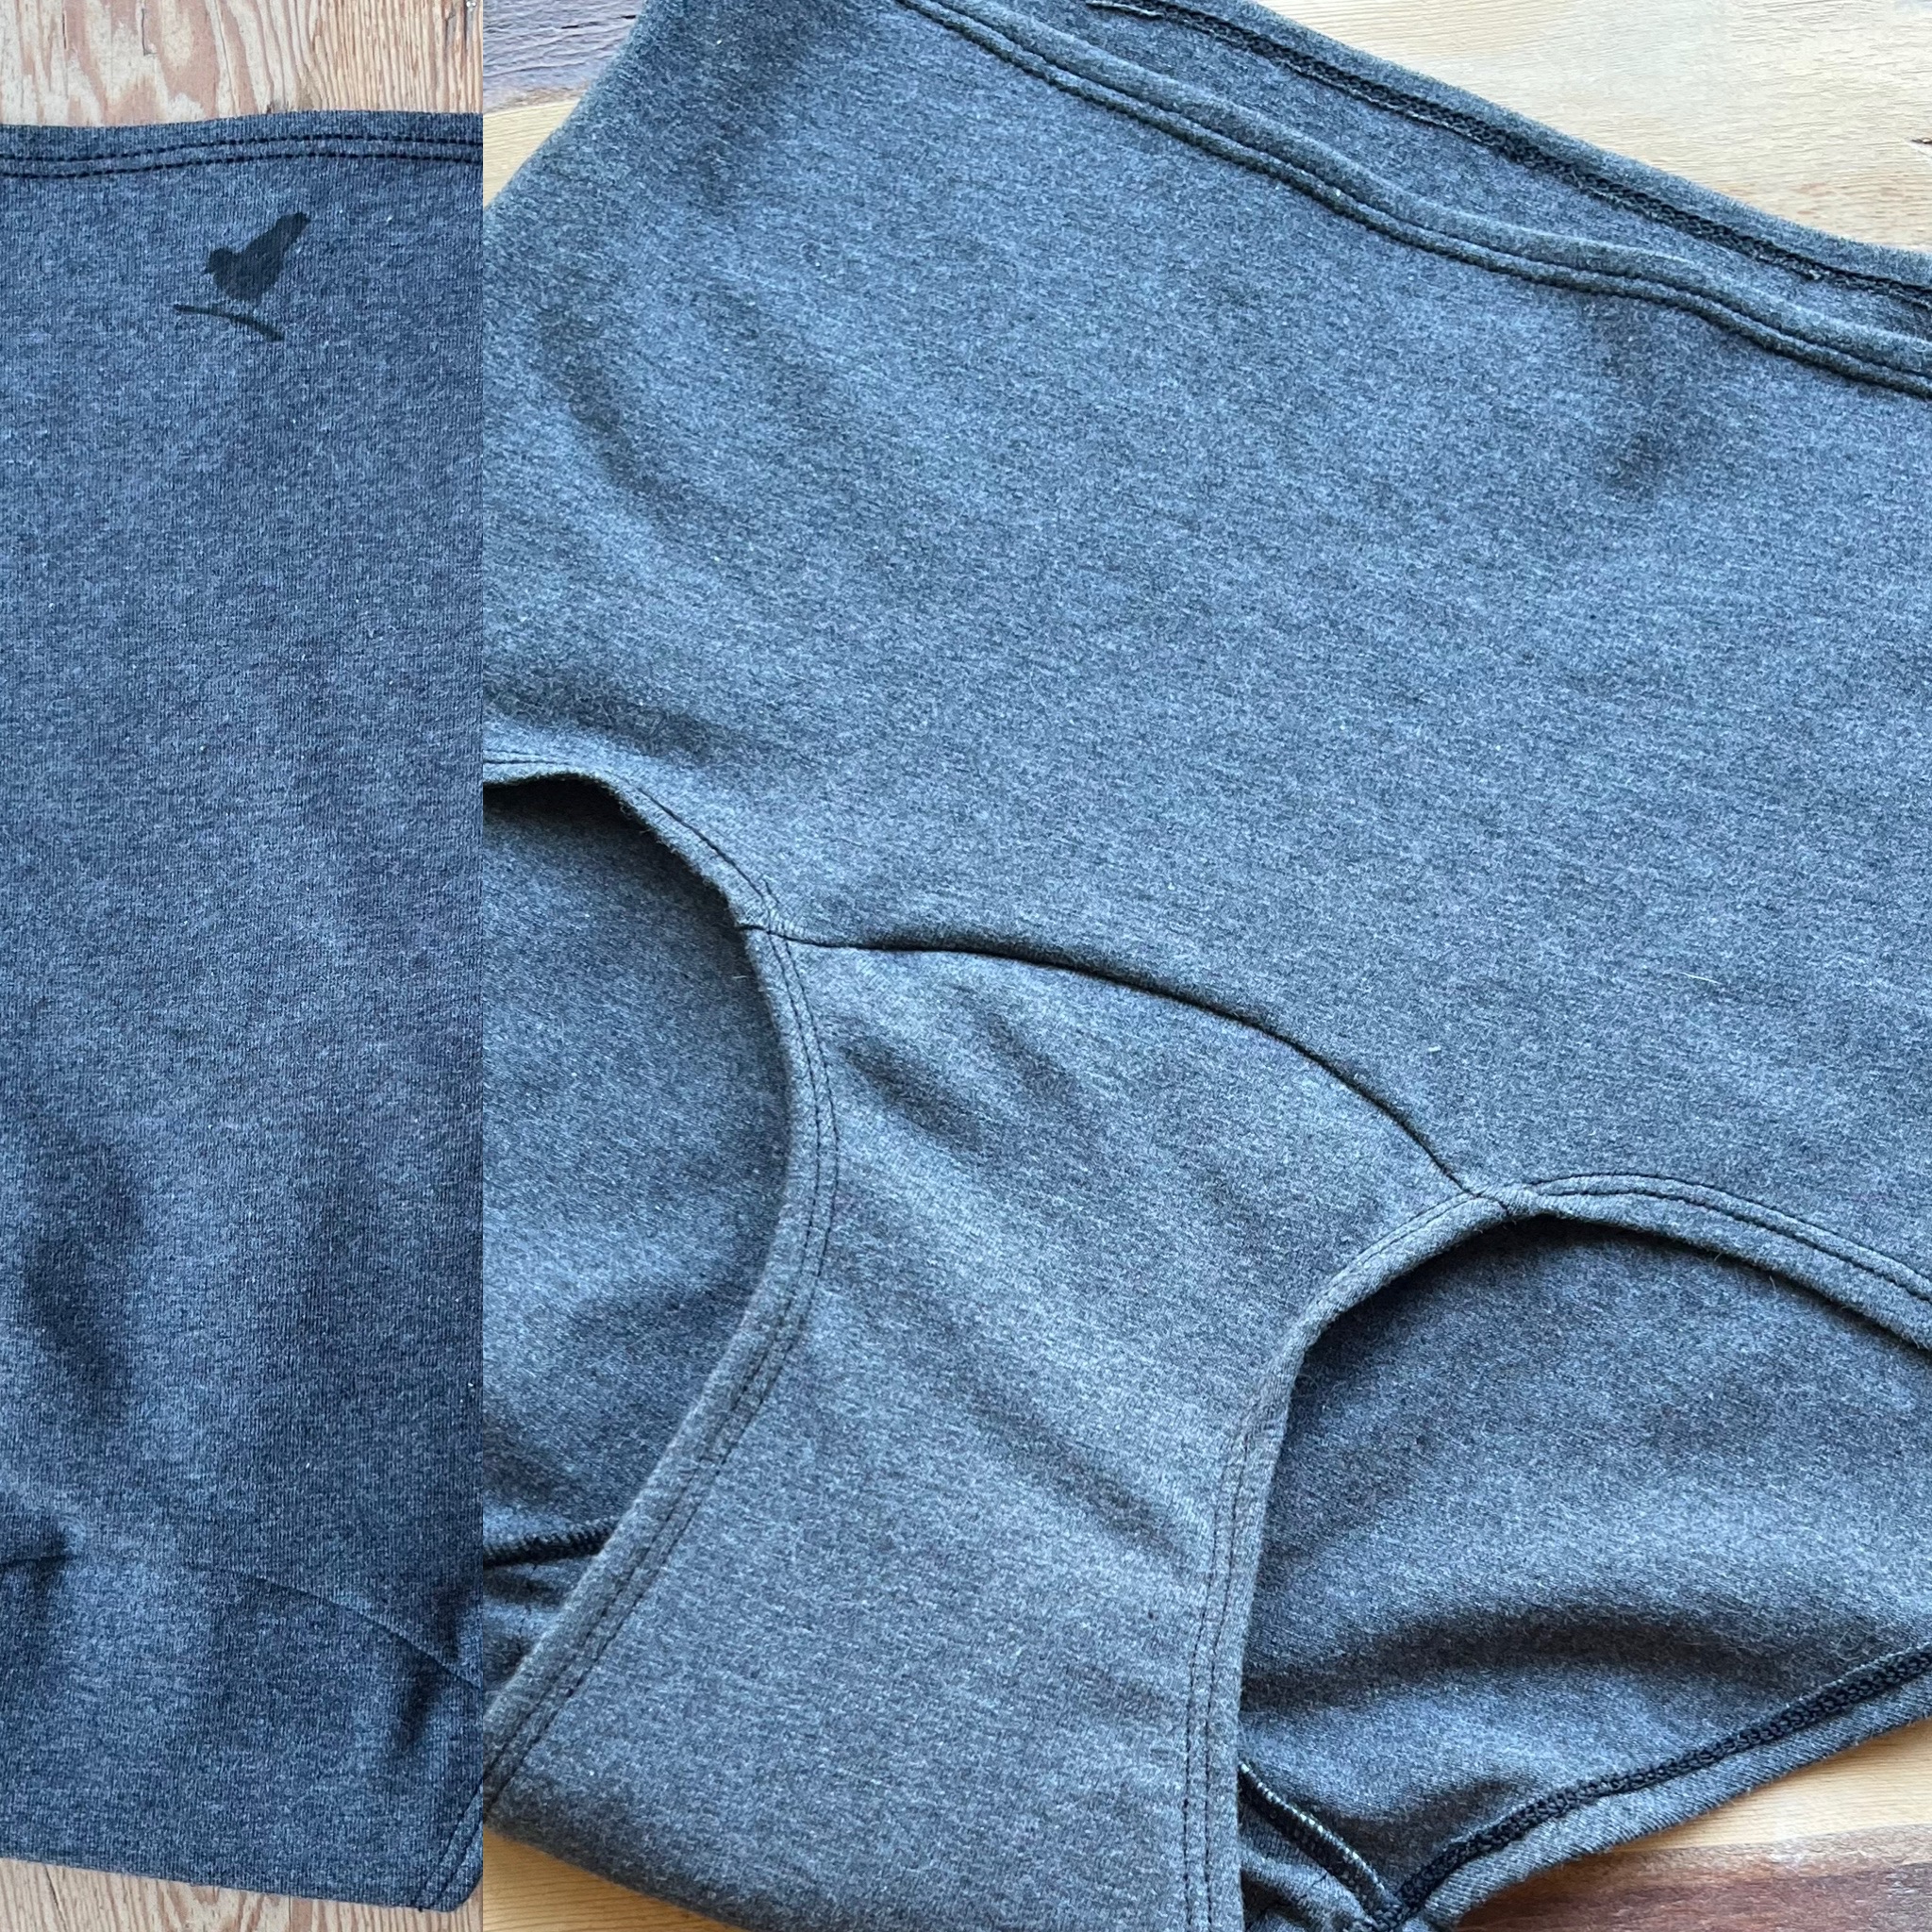 Buy VANILLAFUDGE Cotton padded Panties for Women's (blue XL